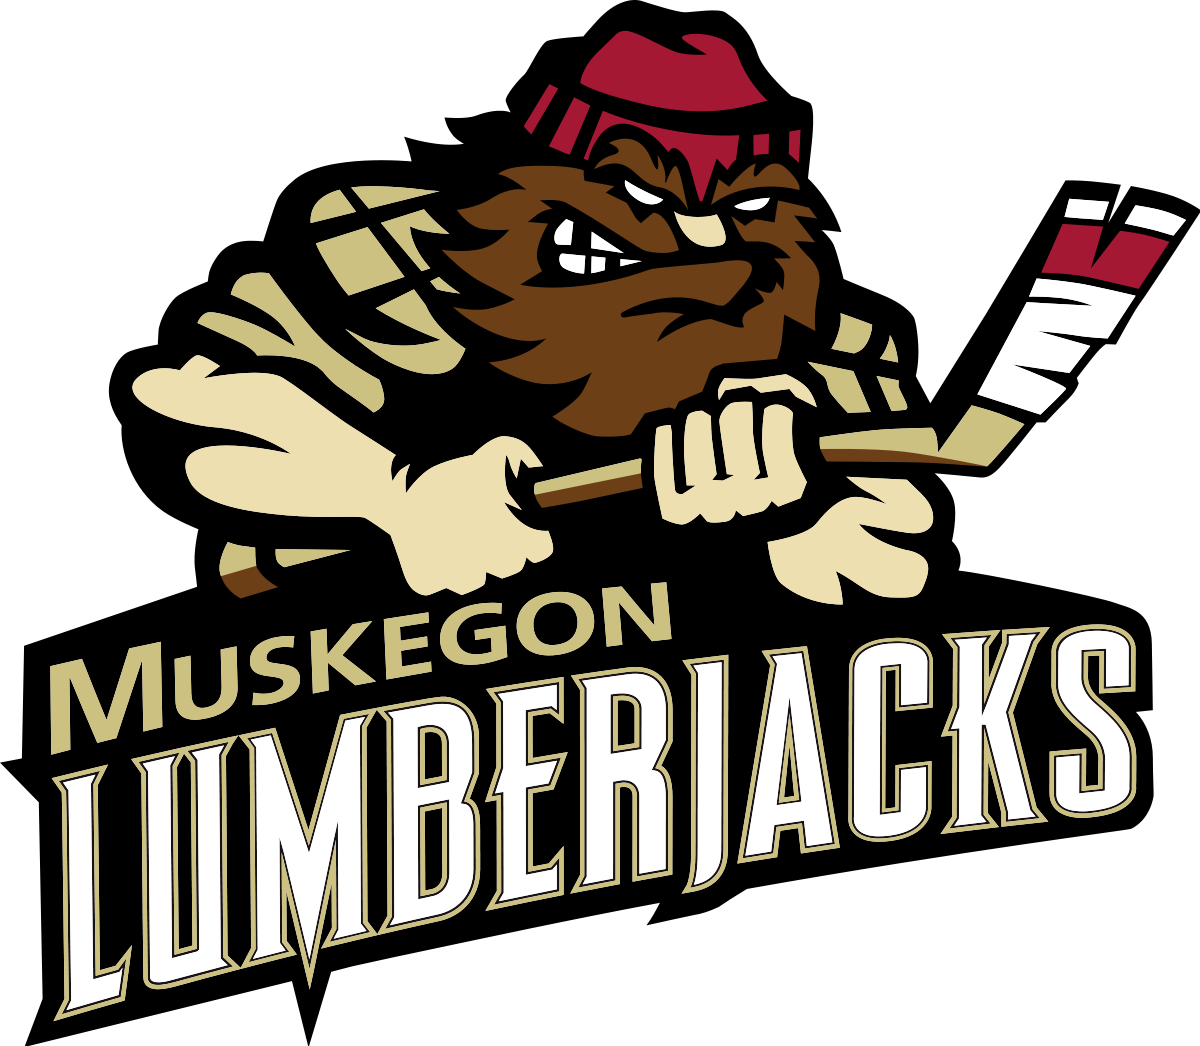 Lumberjack clipart character. Muskegon lumberjacks wikipedia 